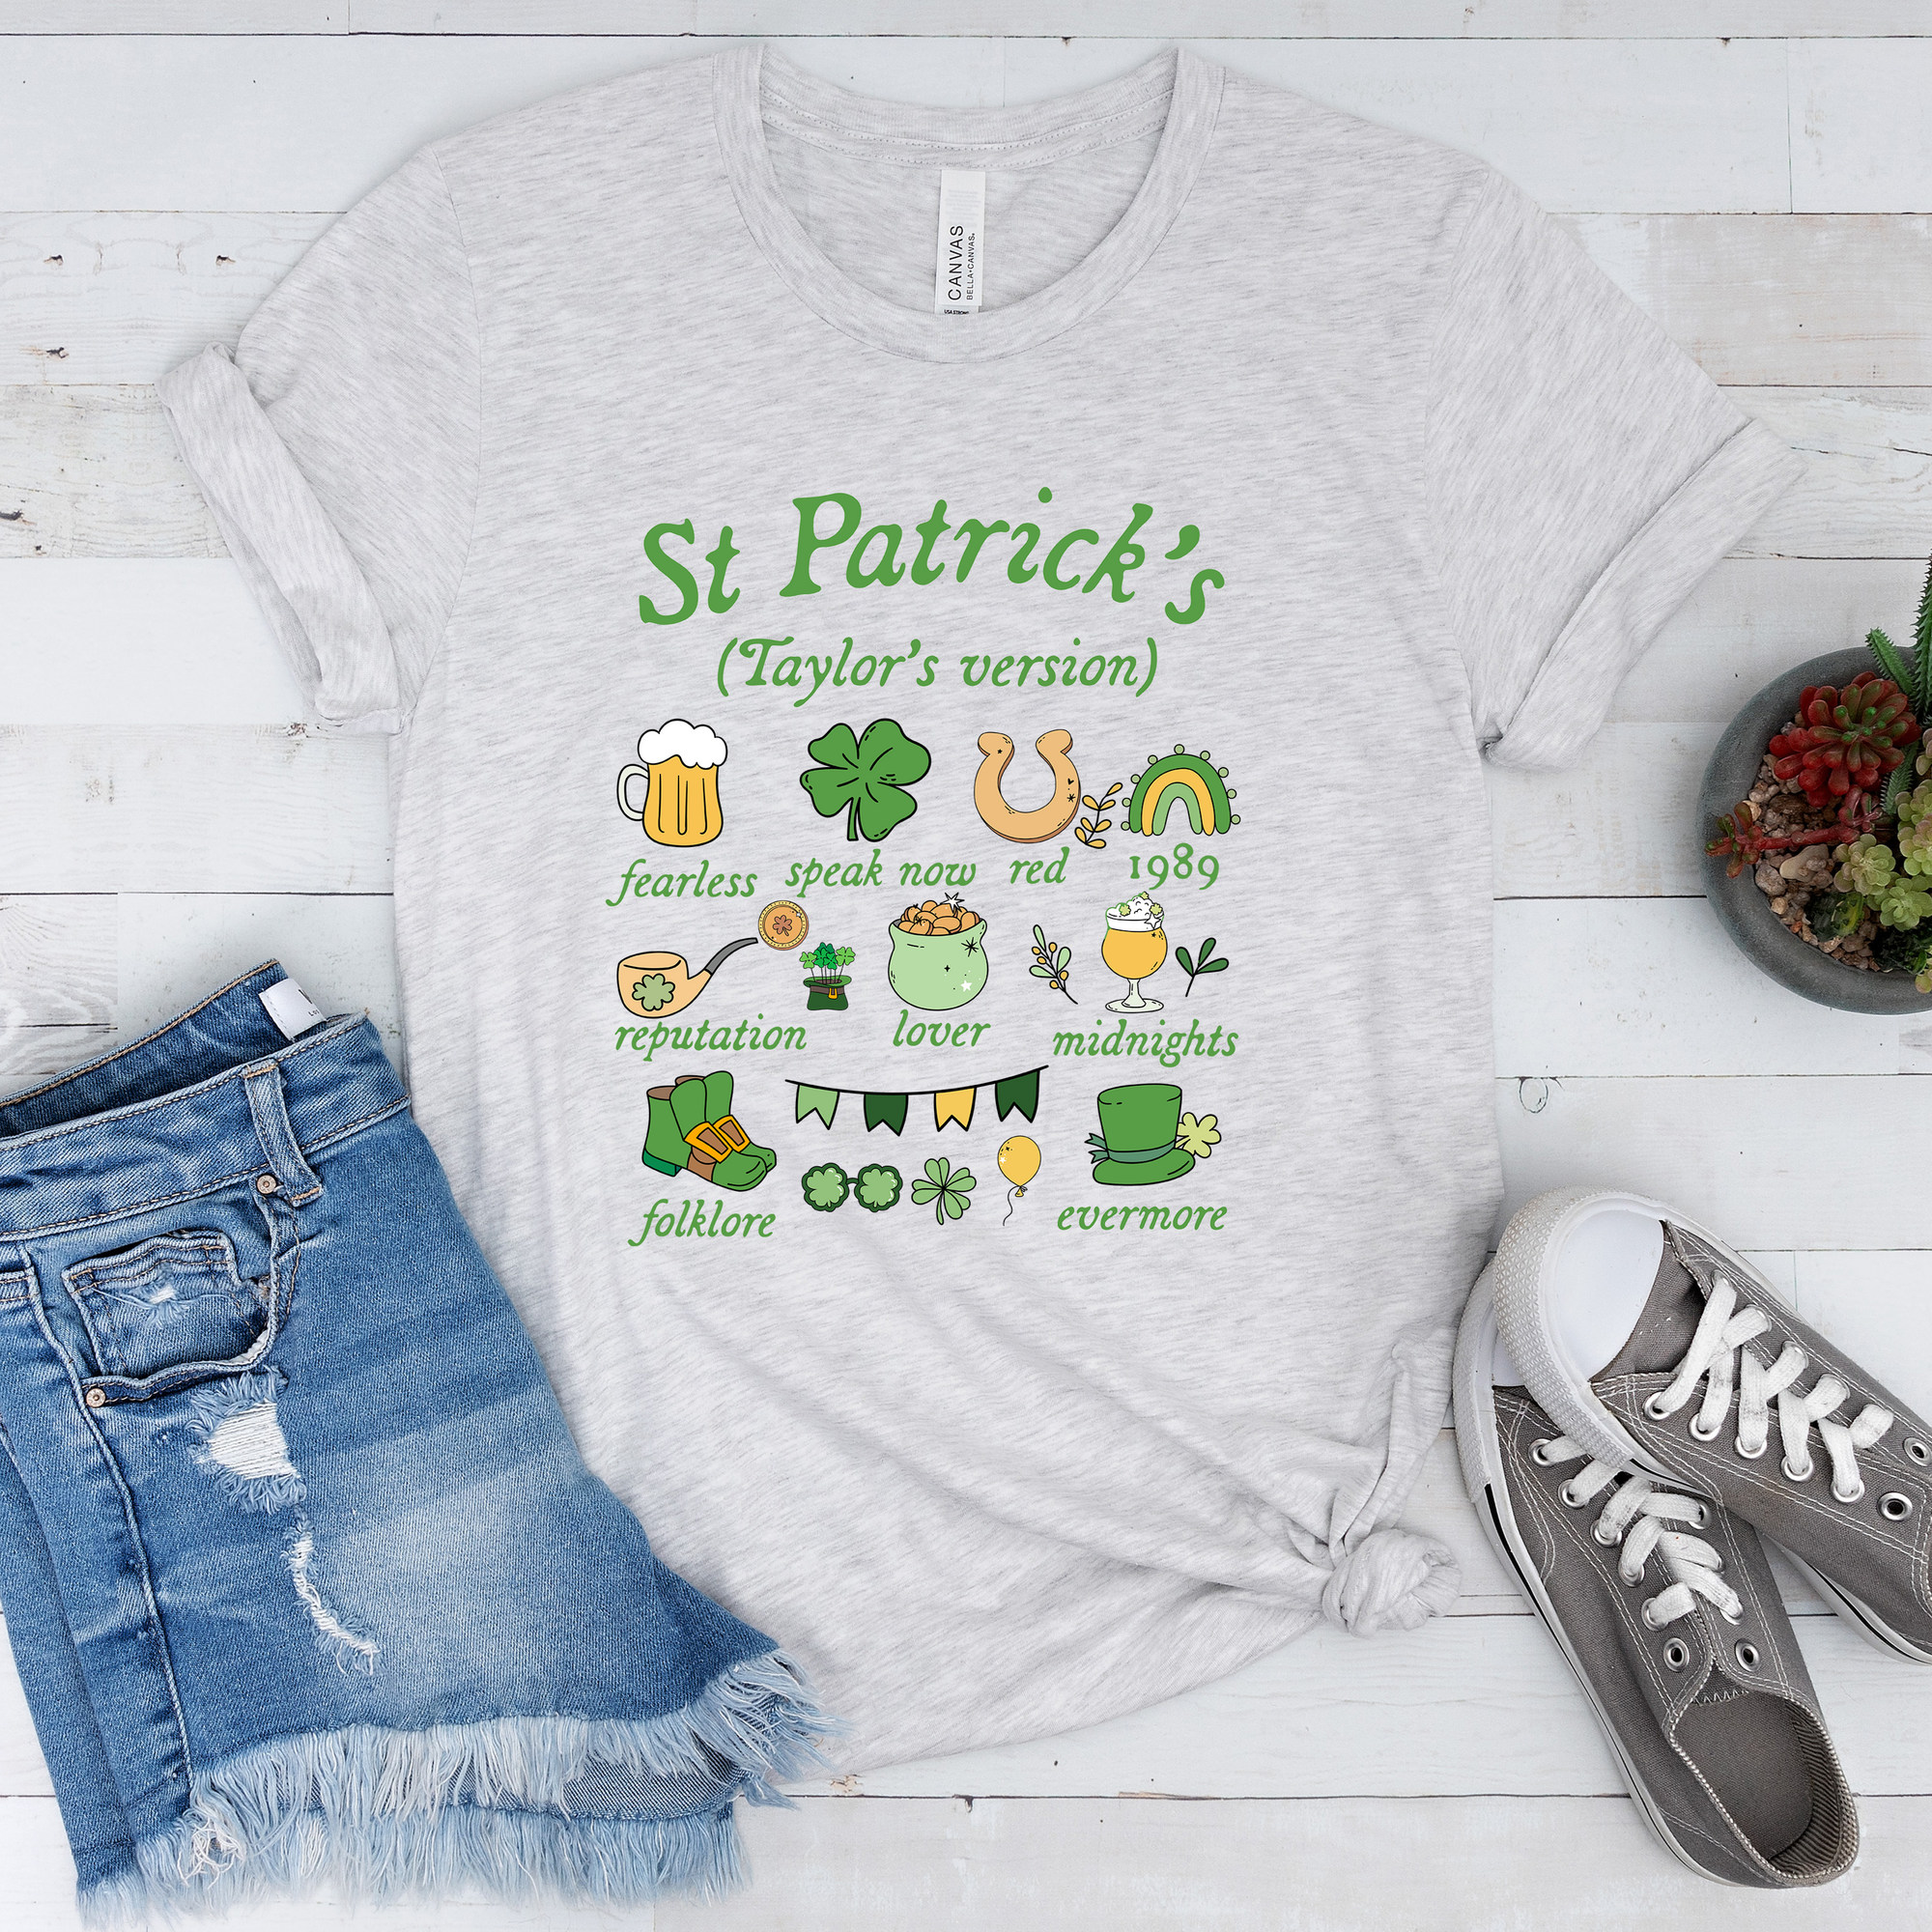 St Patrick's Taylor's Version Tee OR Sweatshirt